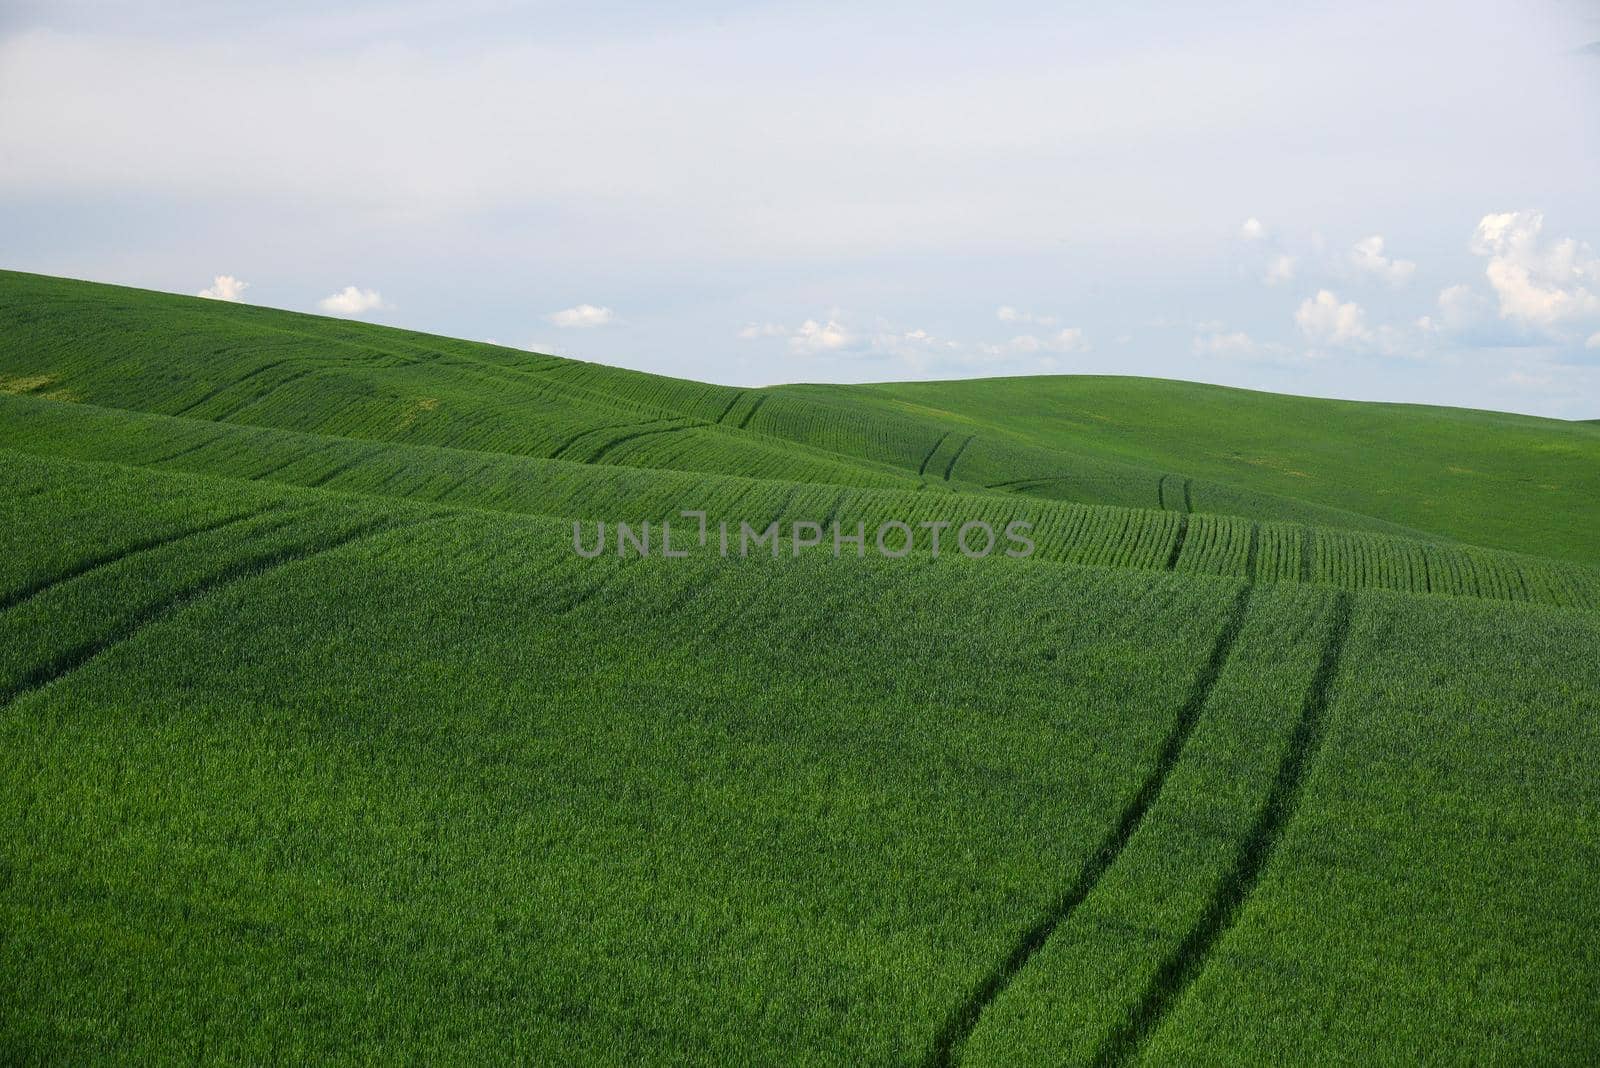 rolling hill of wheat farm land in palouse washington